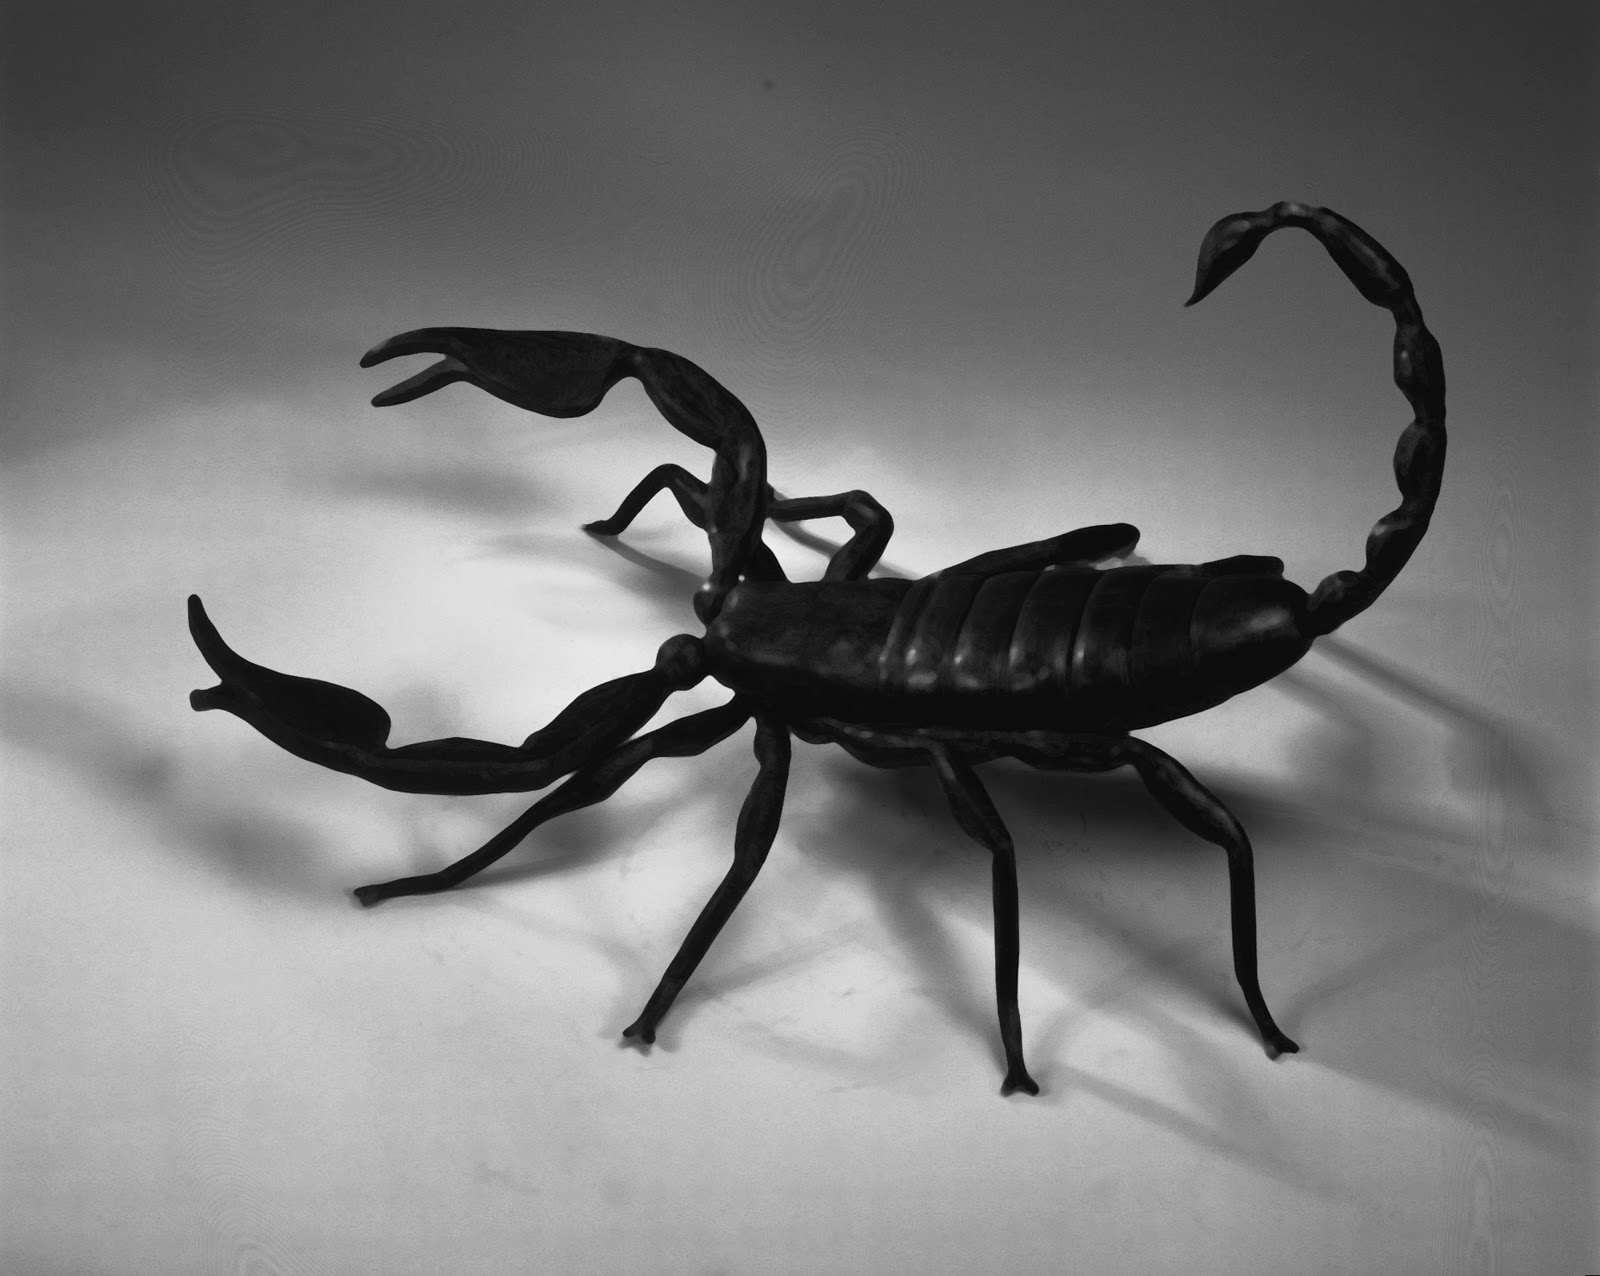 Scorpion Wallpaper